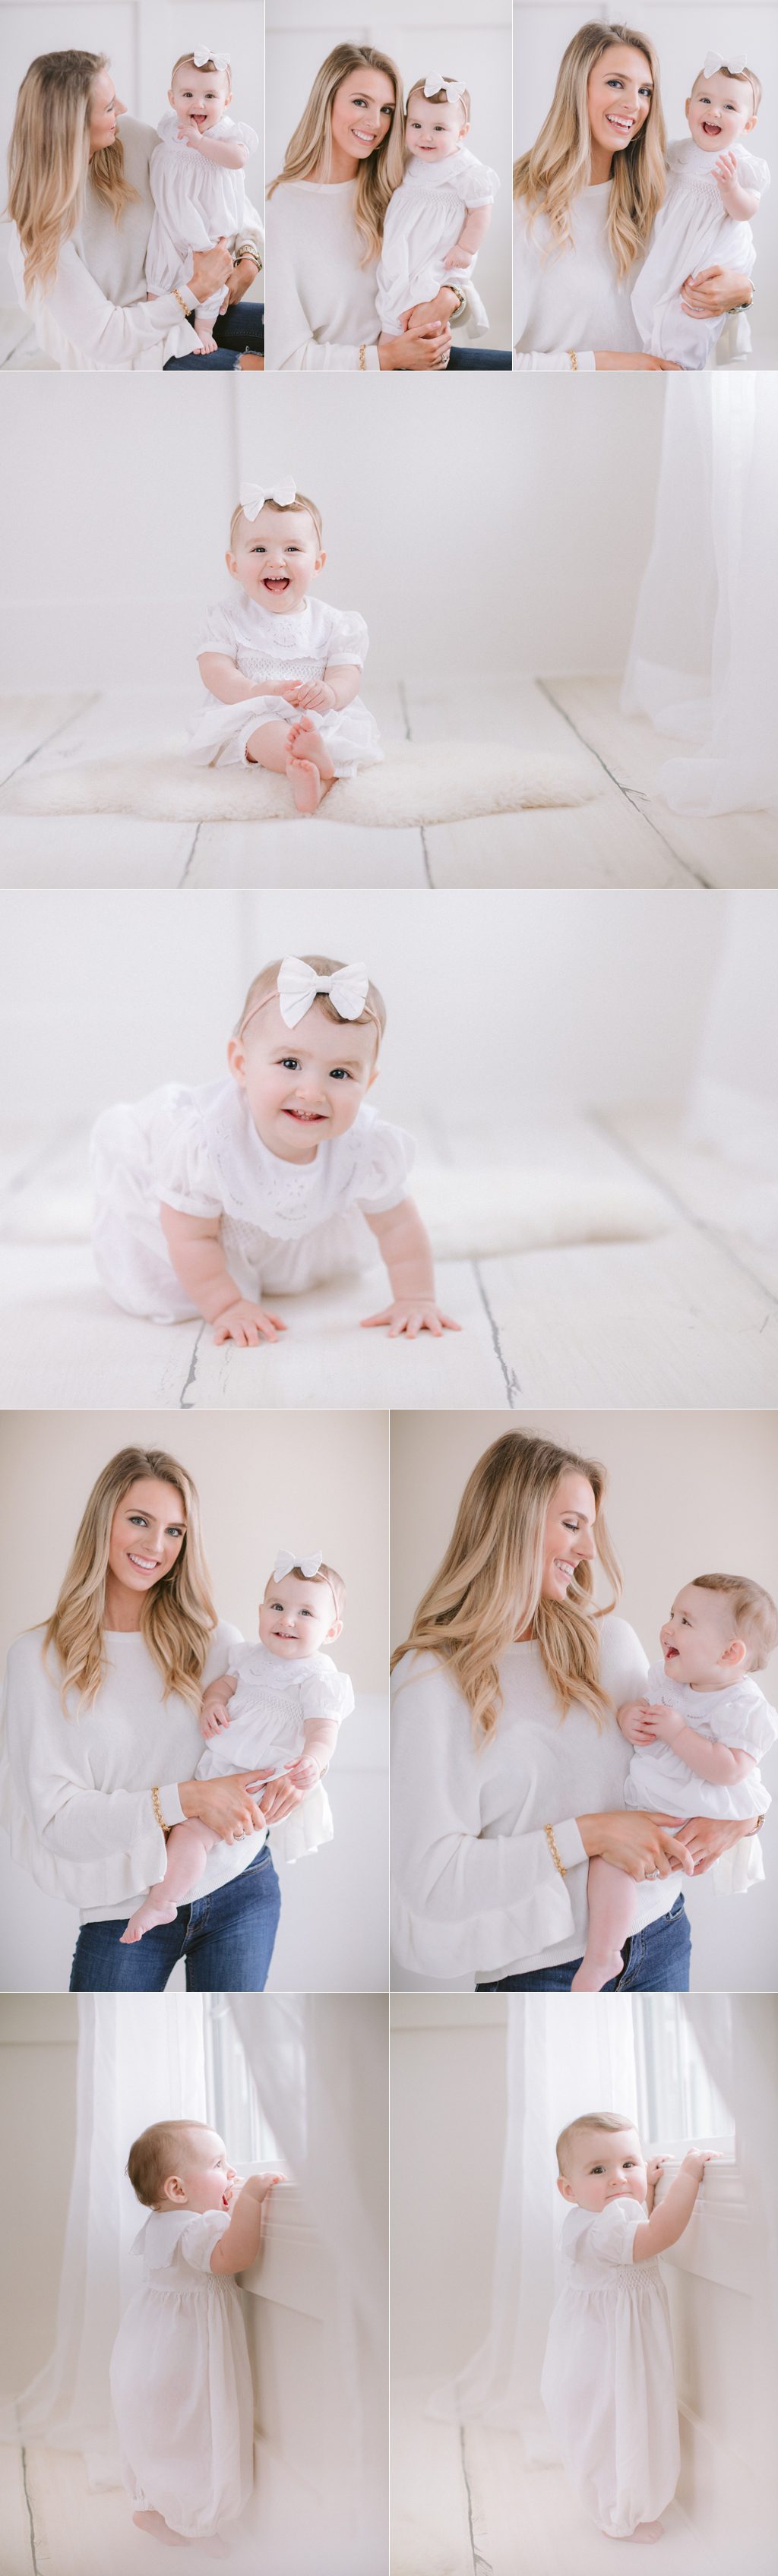 Athens, GA baby portrait studio 11 month milestone photos.